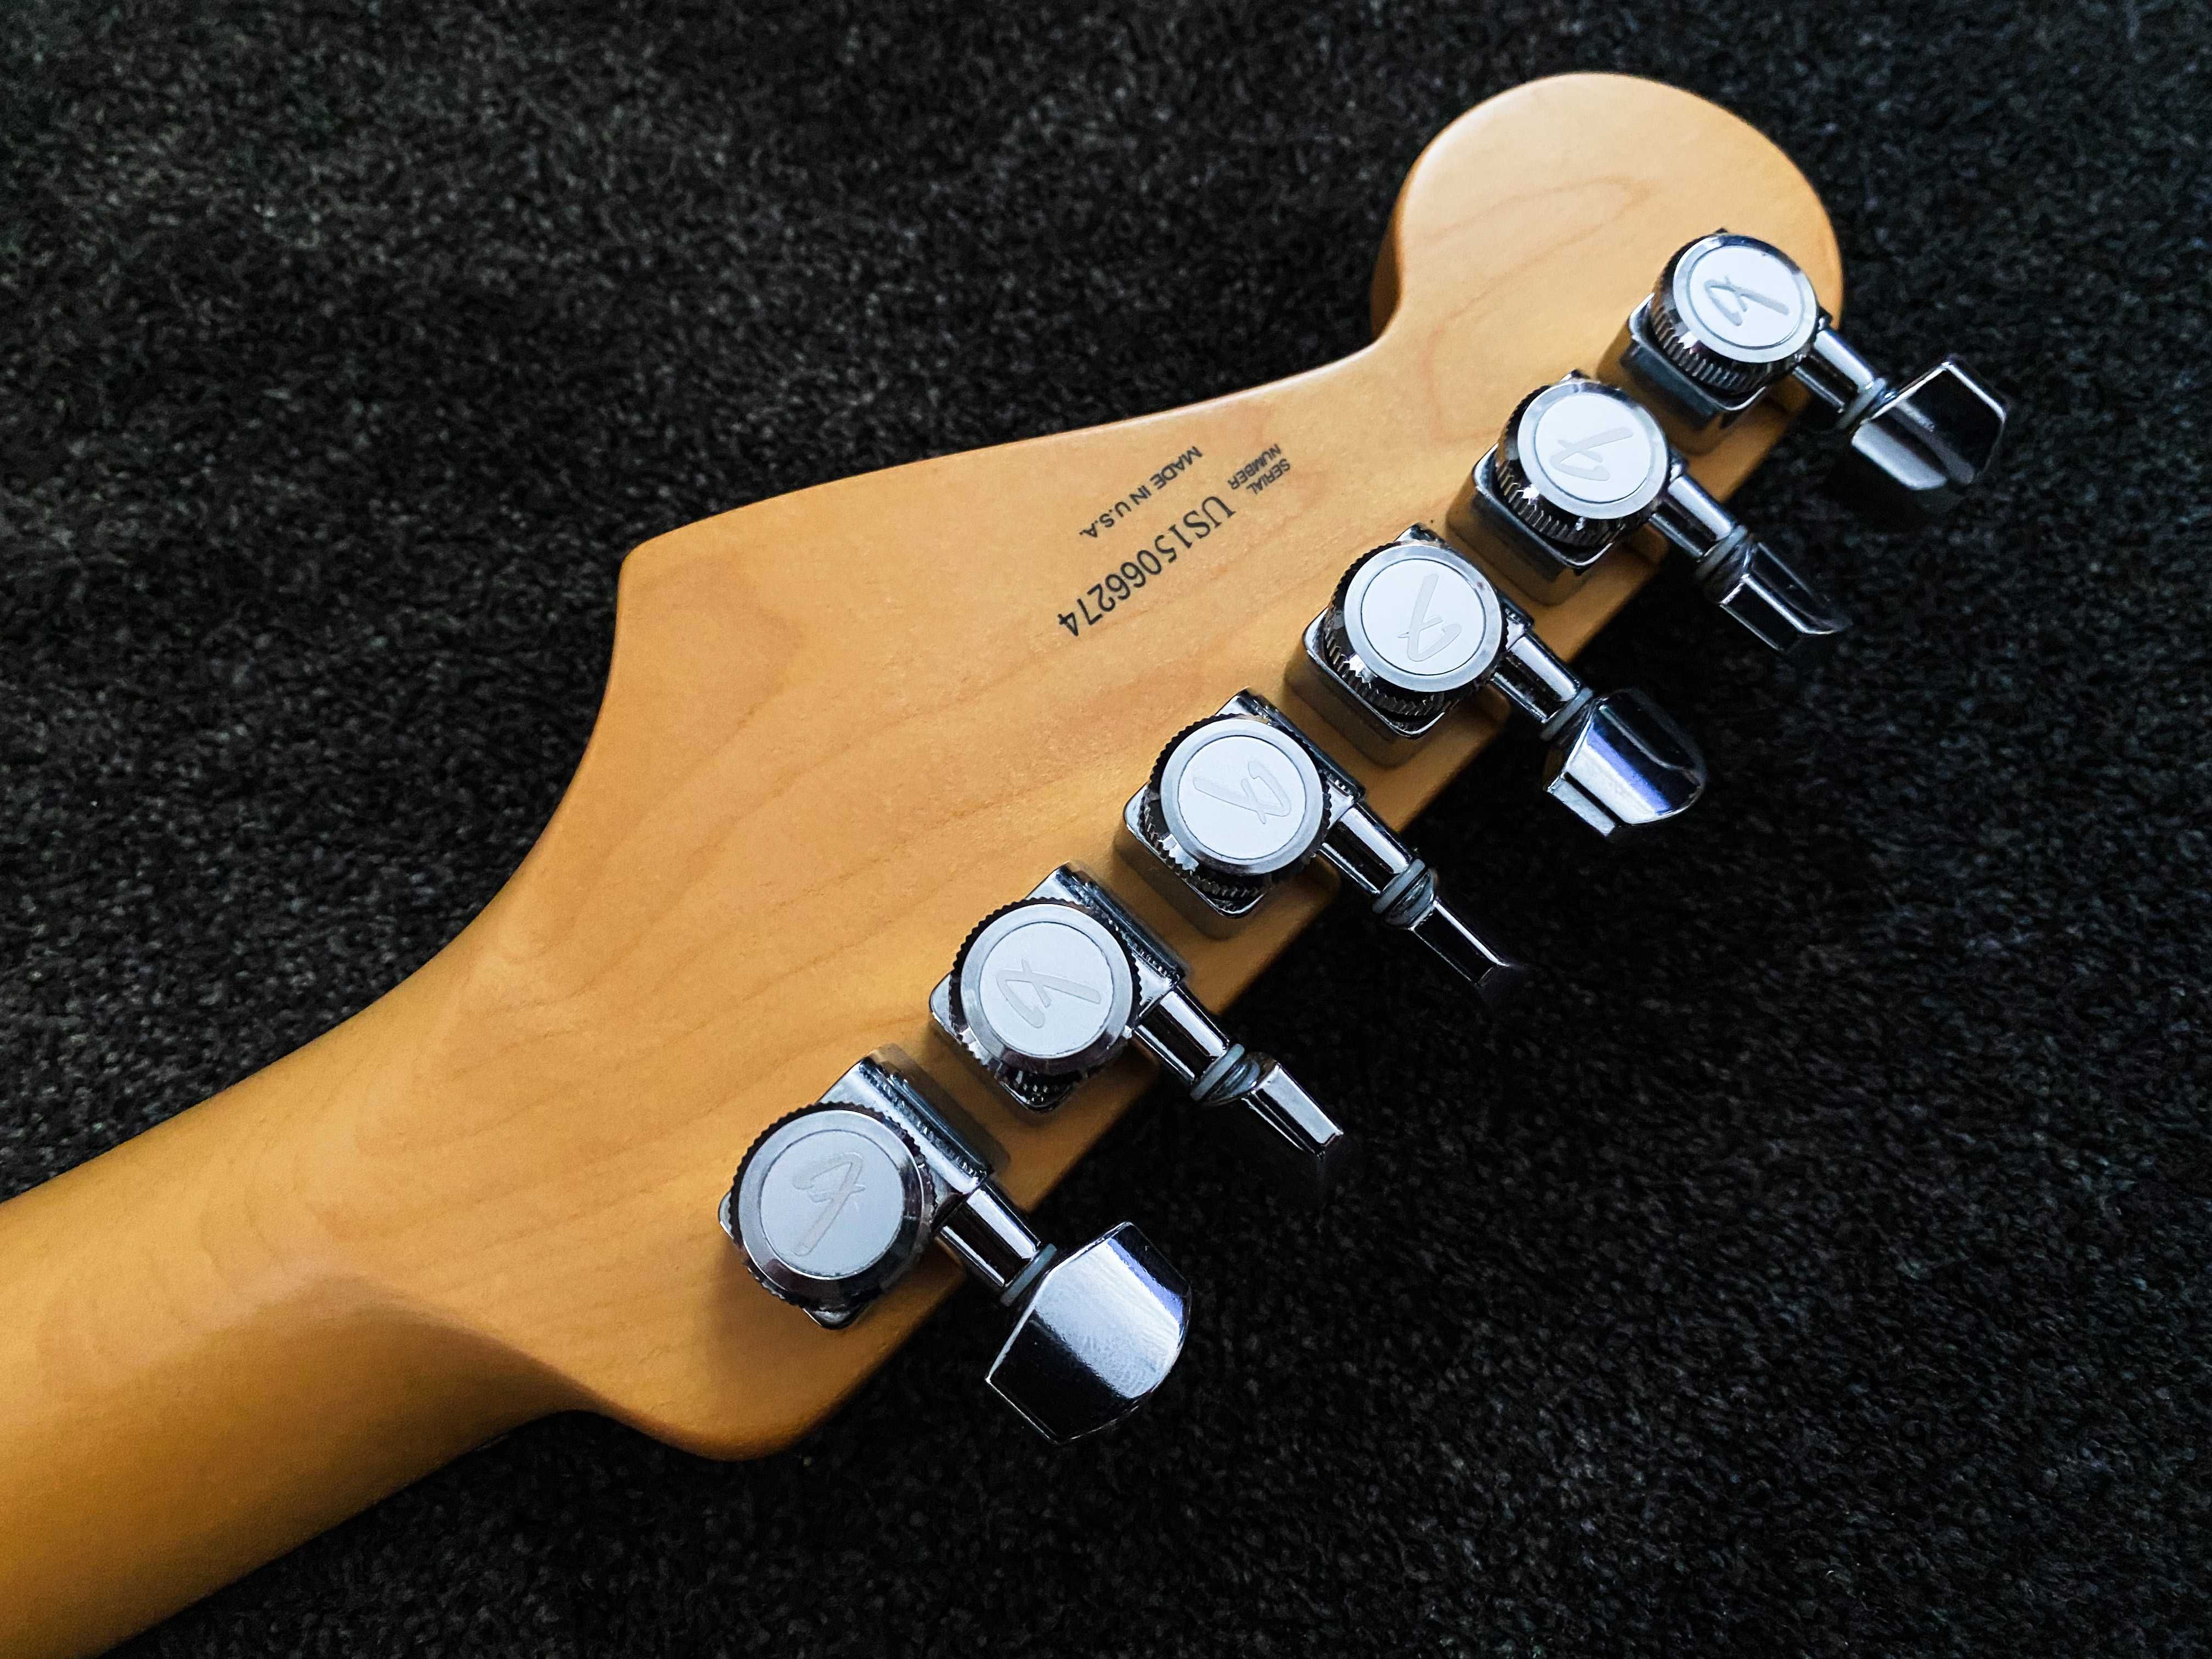 Fender American Elite Stratocaster Autumn Blaze 2016 + CASE